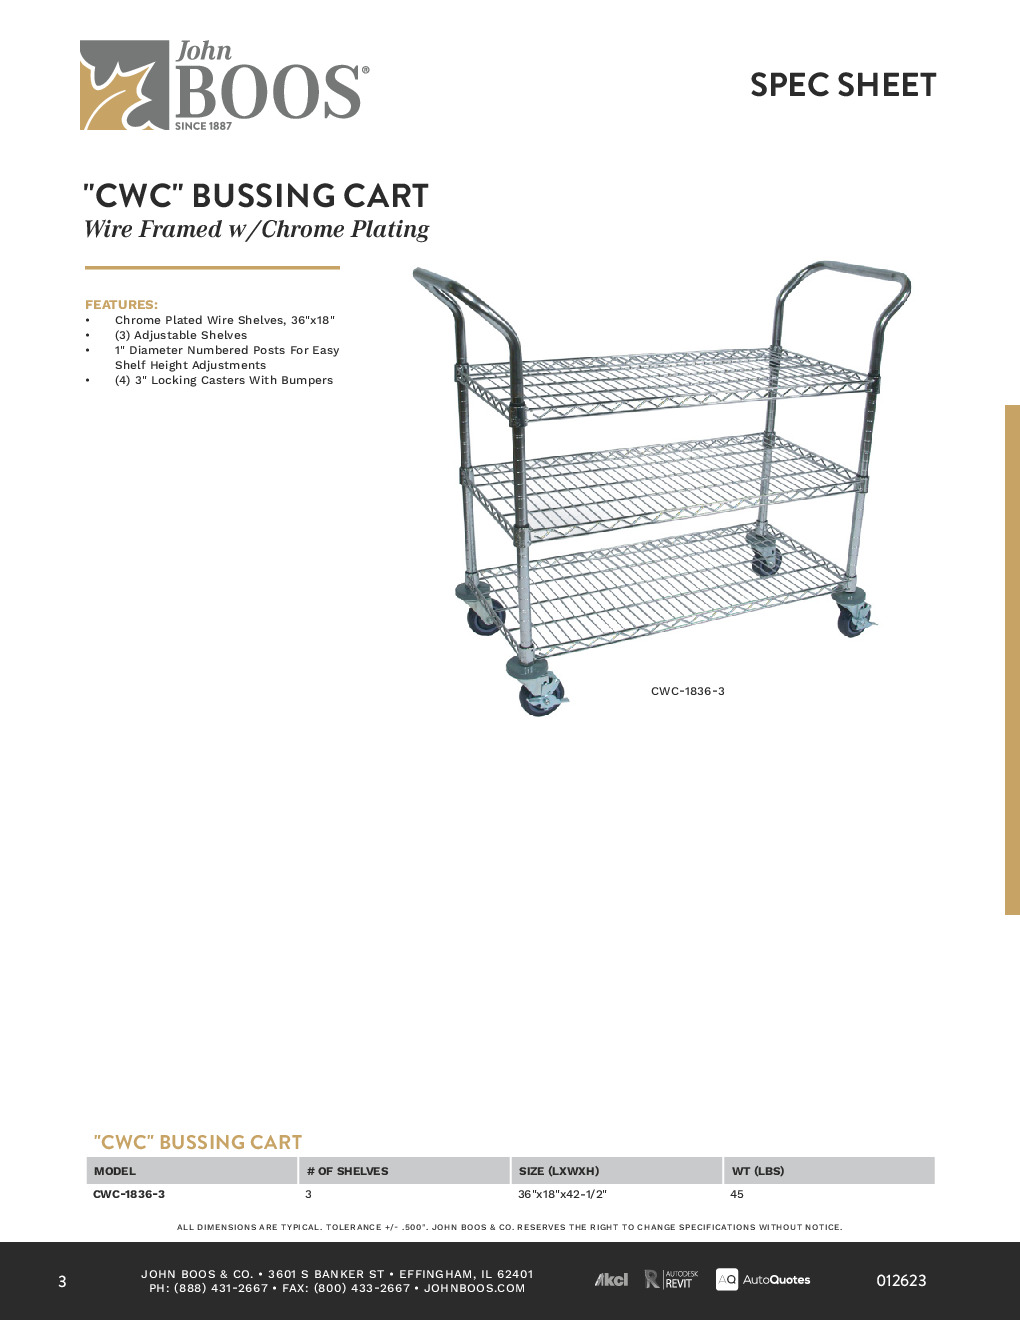 John Boos CWC-1836-3 Metal Wire Bussing Utility Transport Cart